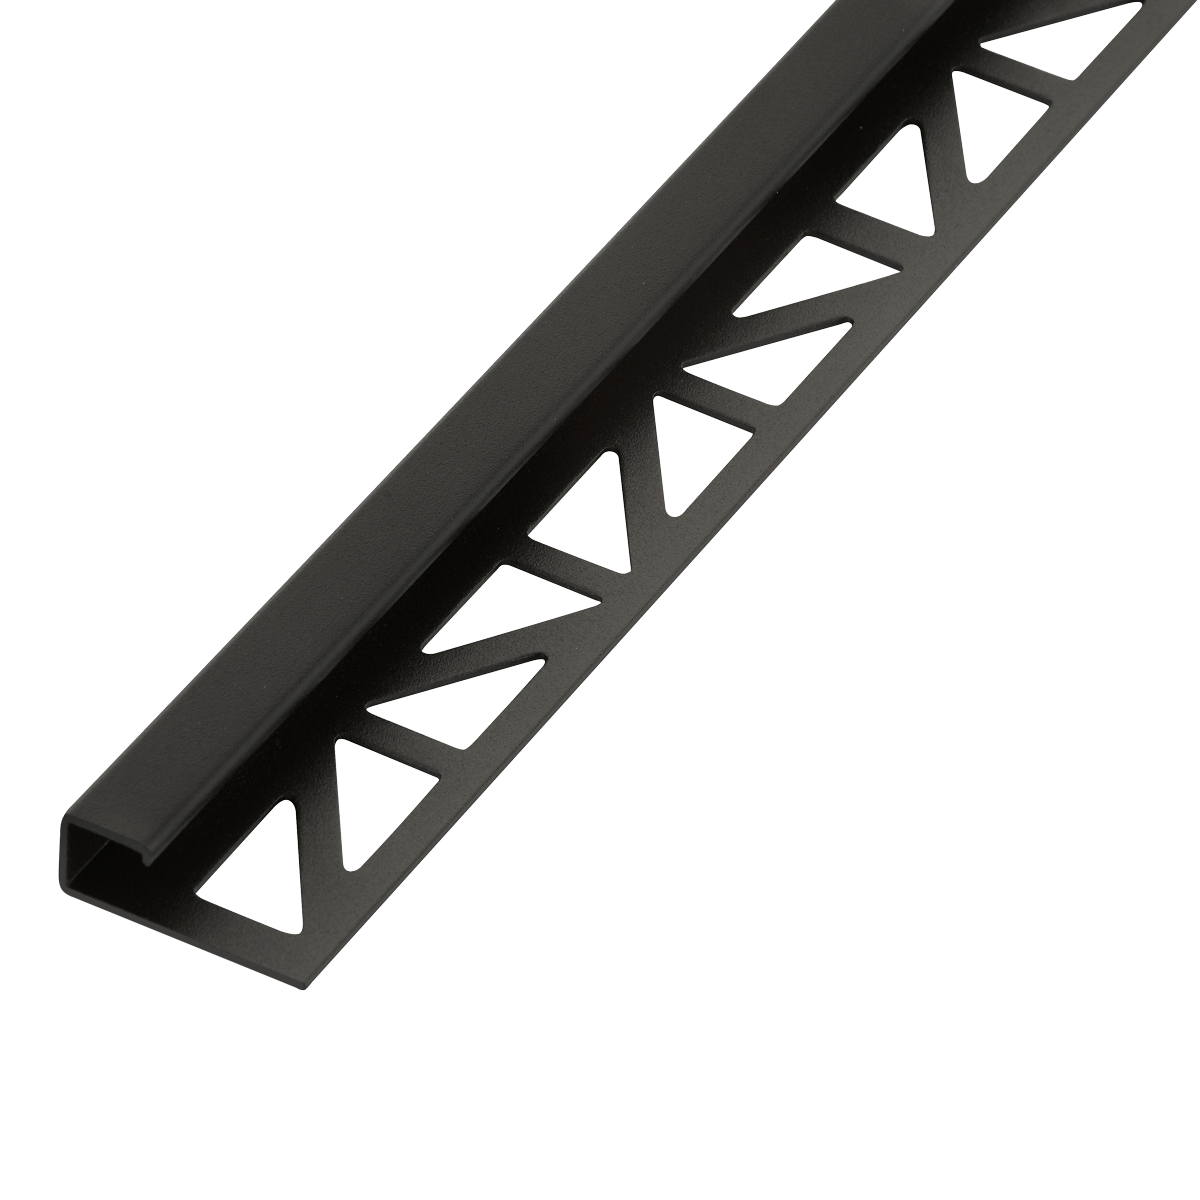 Blanke CUBELINE quadratische Form Aluminium eloxiert schwarz matt 11 mm hoch 2,5 lang